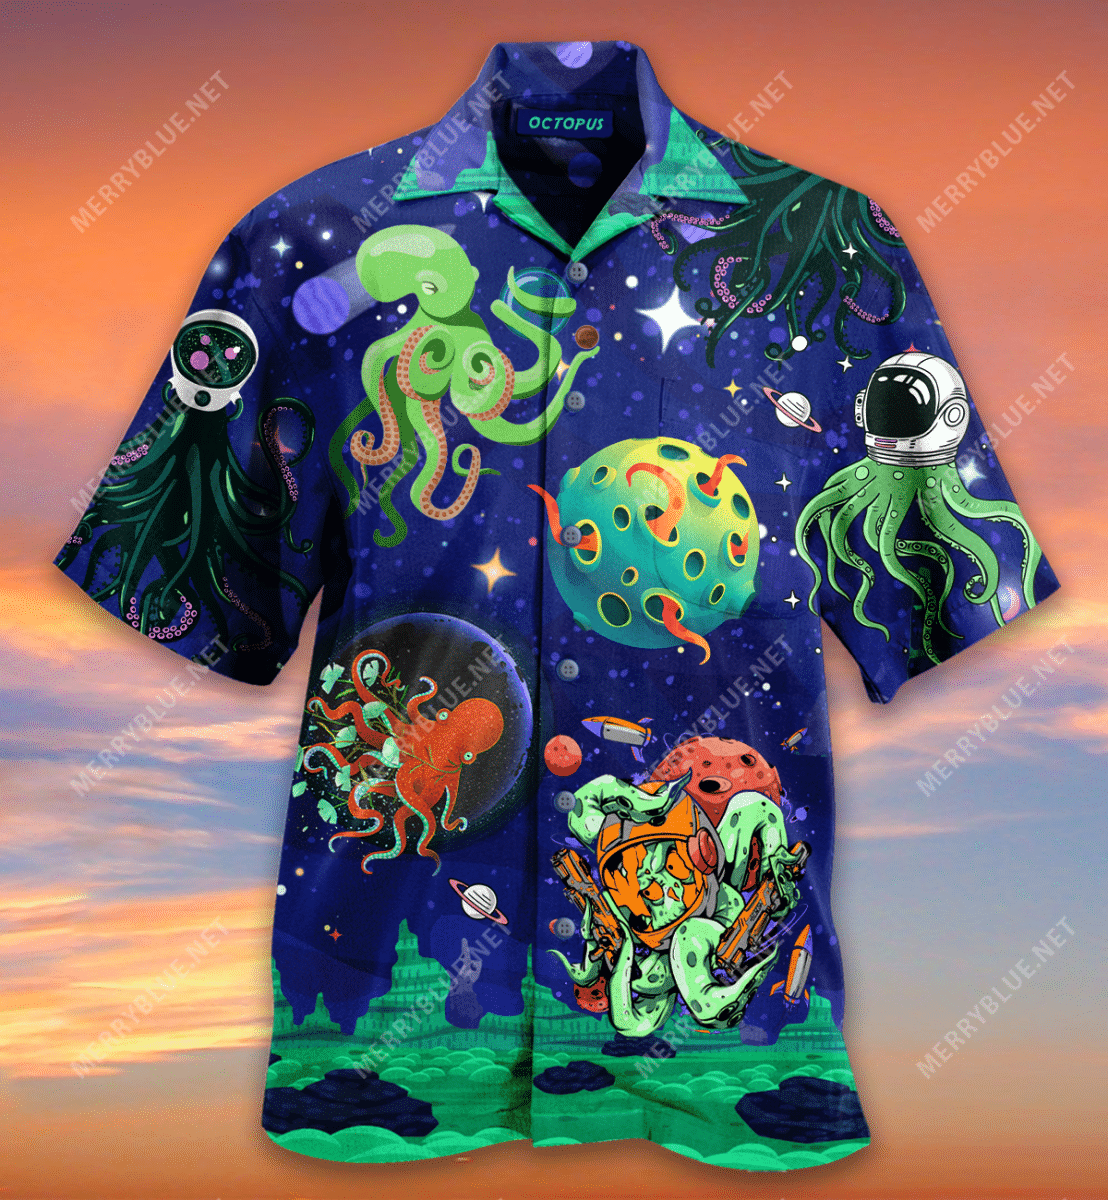 Octopus Invades Space Hawaiian Shirt